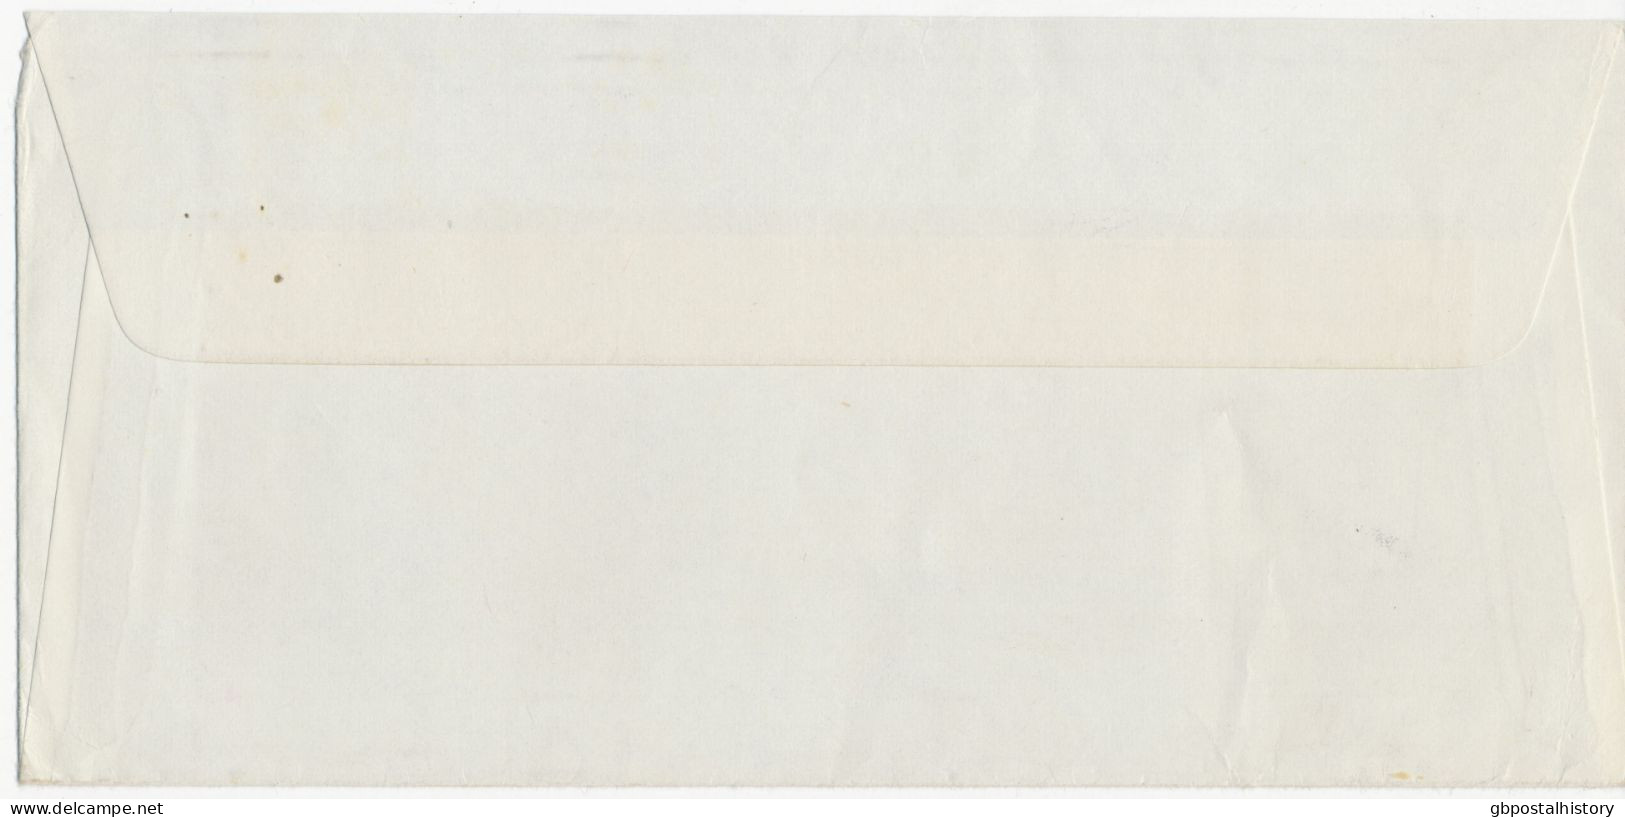 GB 1972, QEII 2½p Machin Embossed Stamped To Order Large Postal Stationery Envelope (Barclays Bank, London E.C.) VF - Machin-Ausgaben